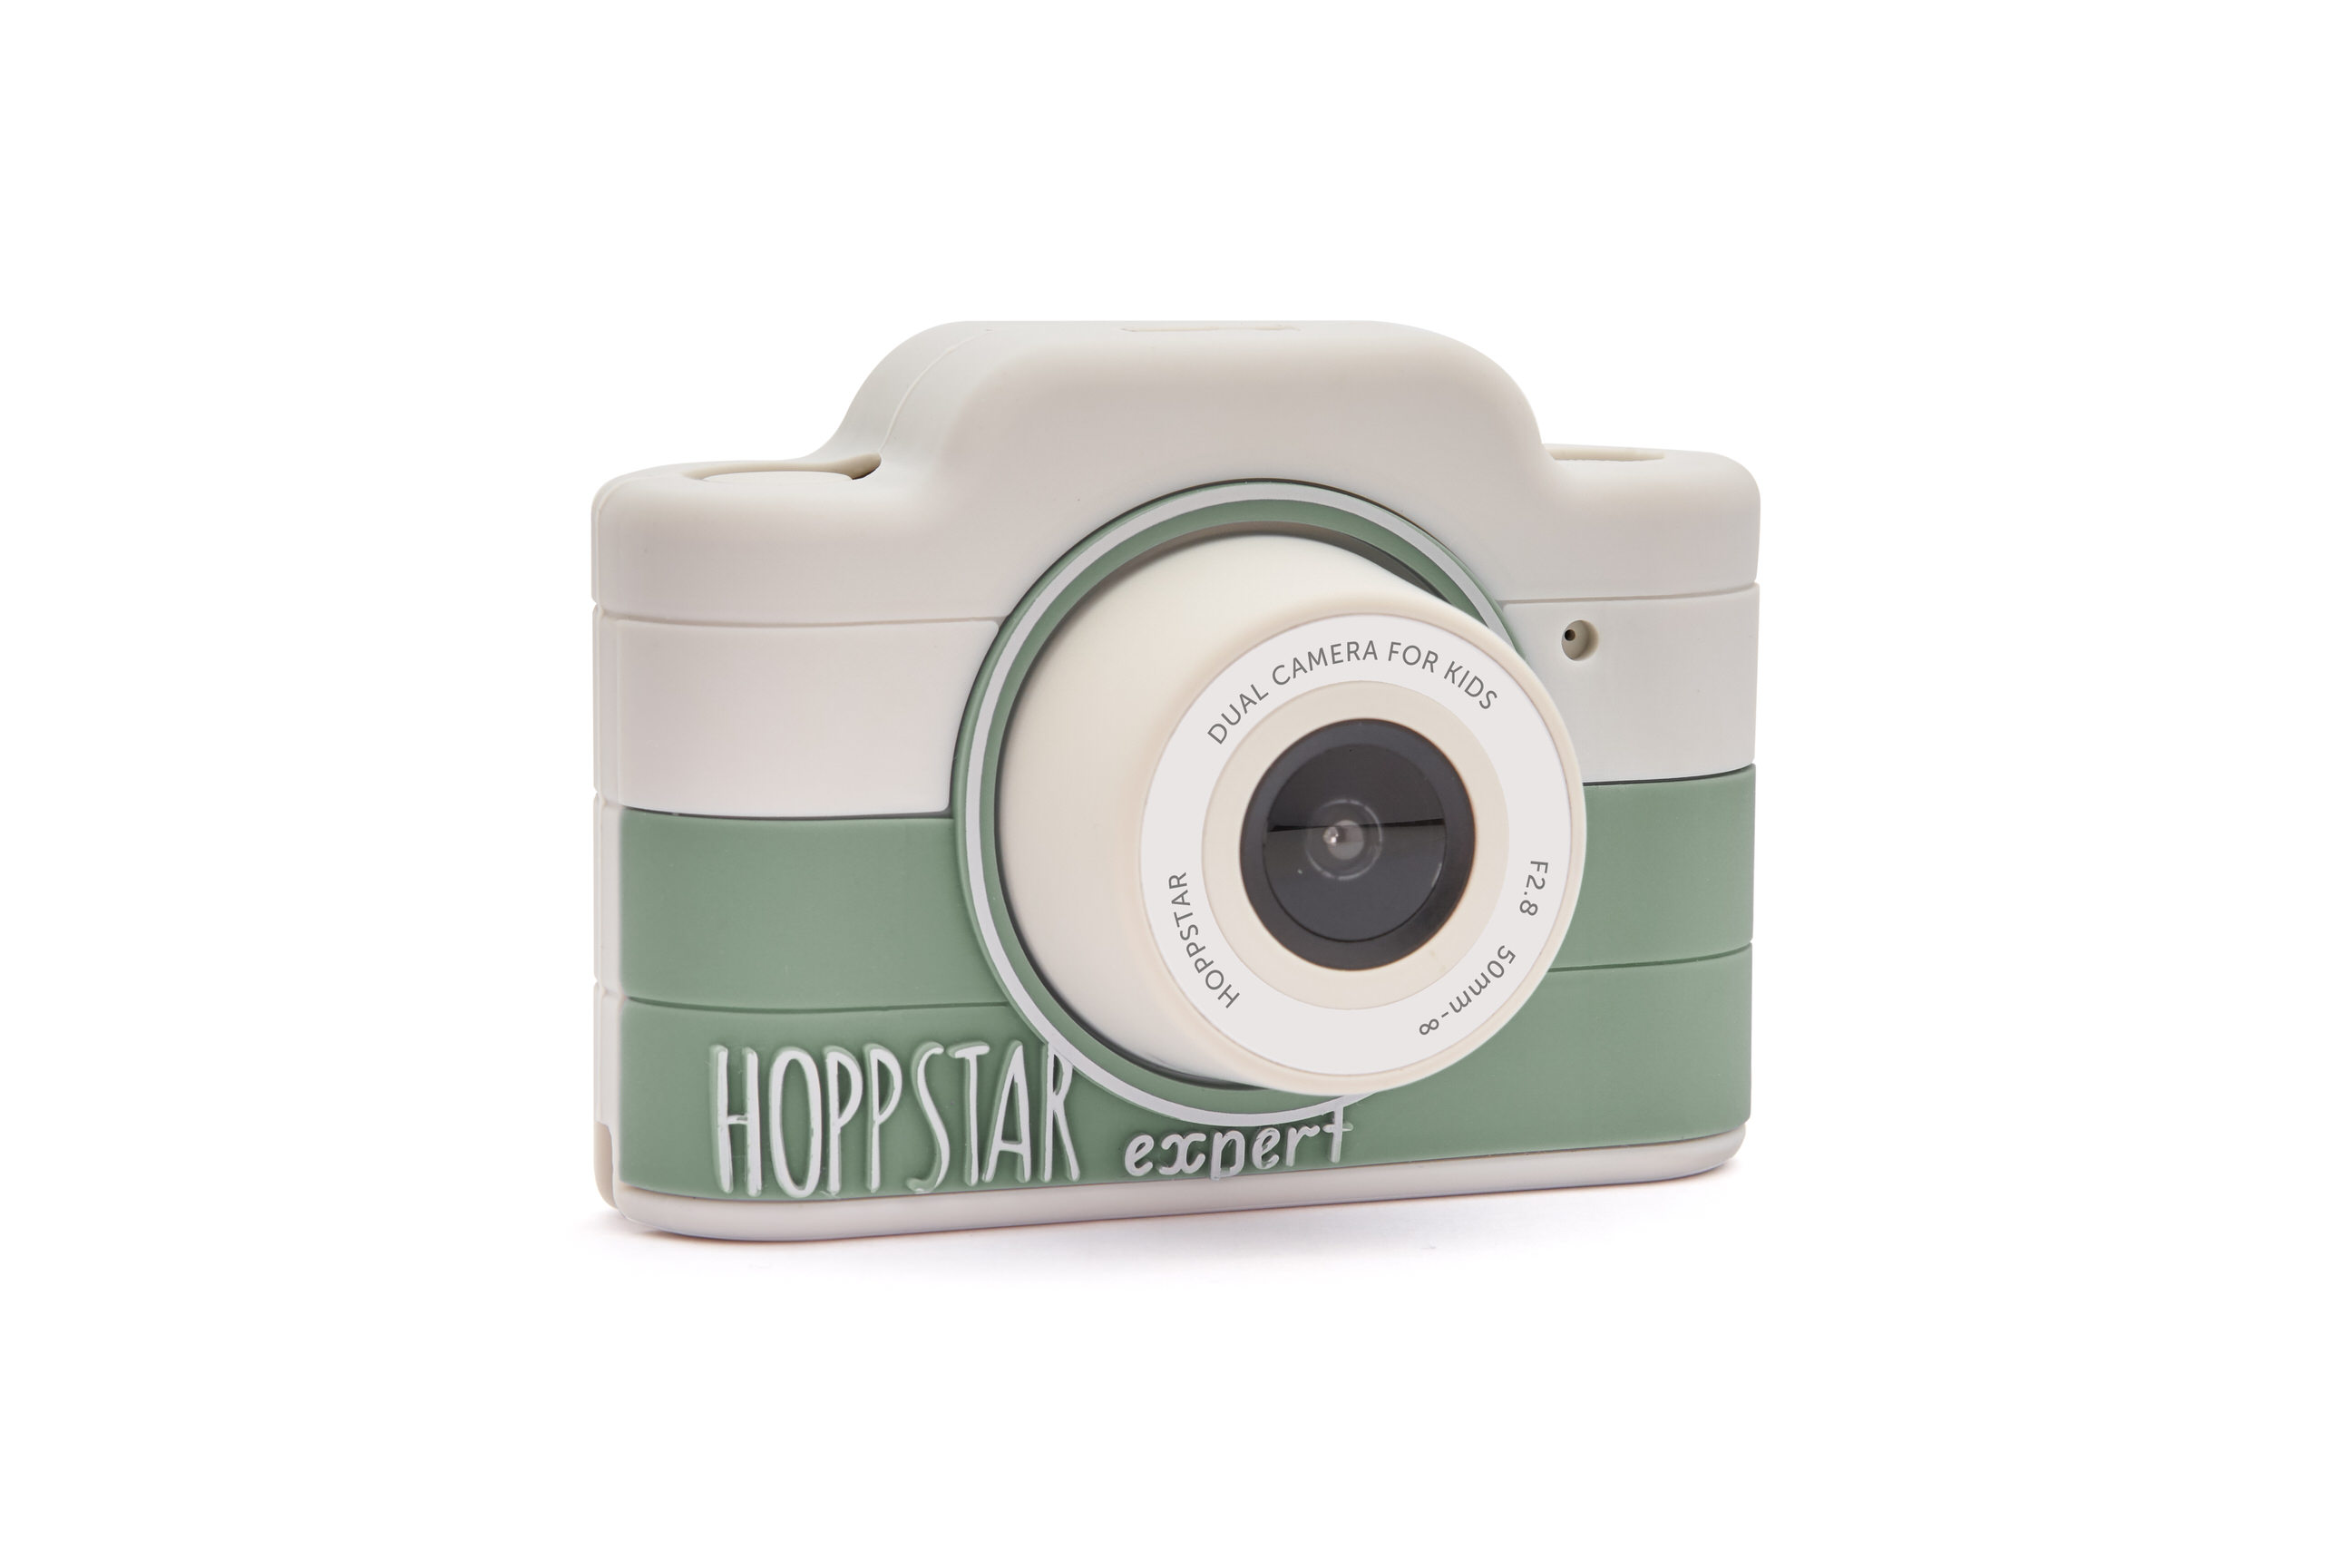 Hoppstar Expert Kamera mit Laurel (grün/weiß) Silikonhülle, Frontalansicht leicht schräg